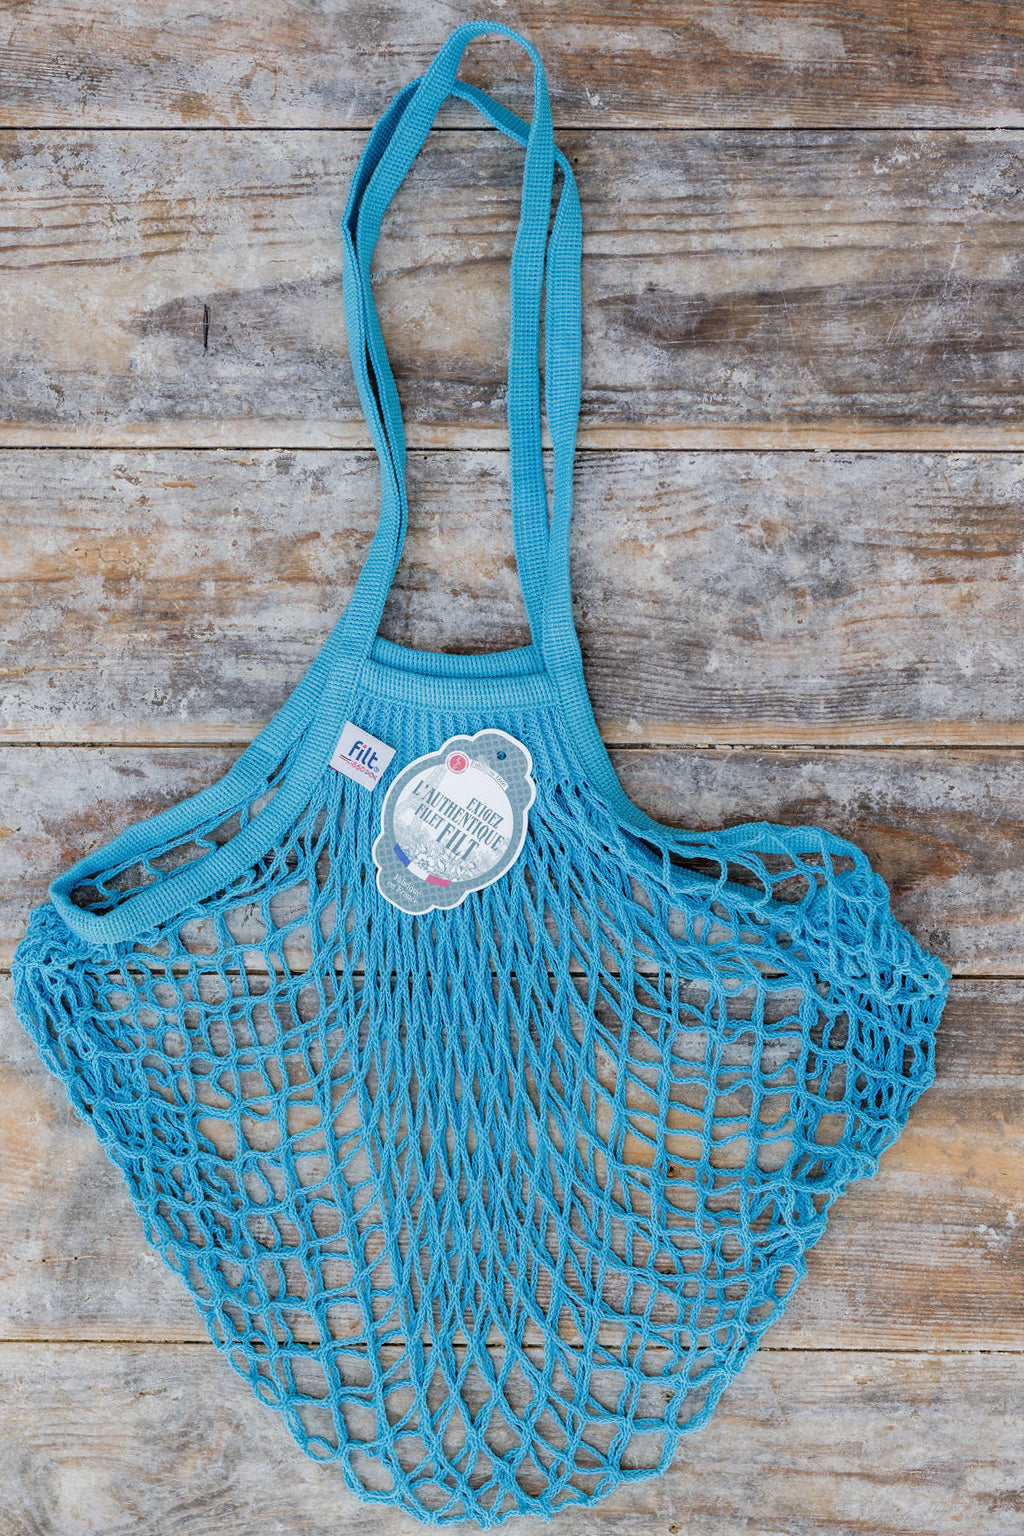 Filt French String Bag Long Handle Jewel Blue | Filt | Miss Arthur | Home Goods | Tasmania